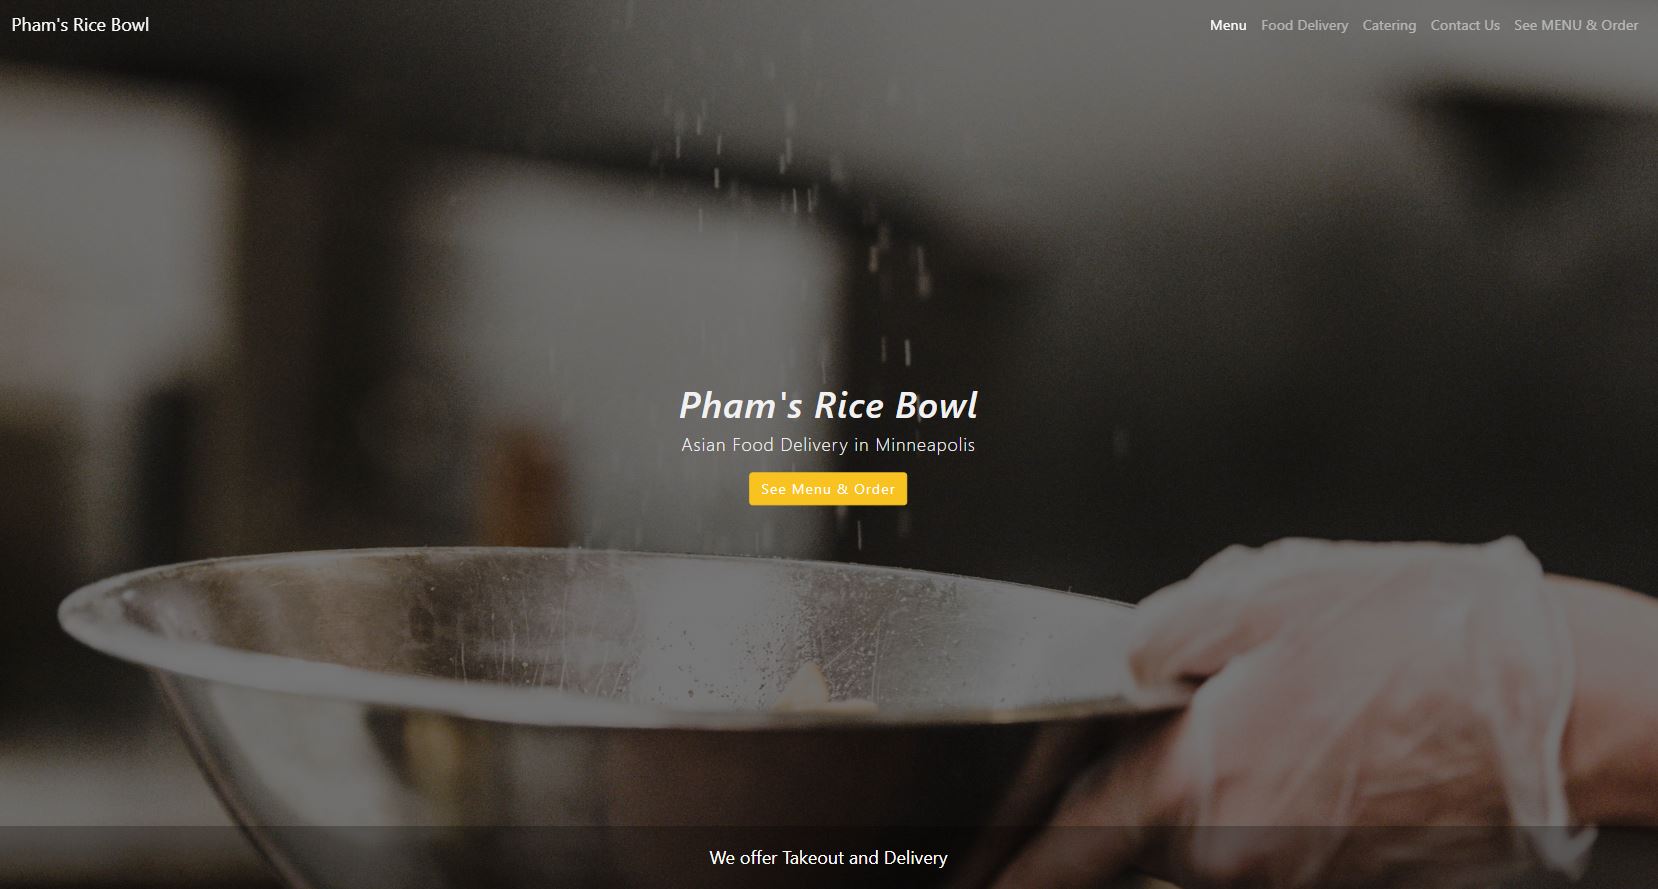 Pham's Rice Bowl web page header